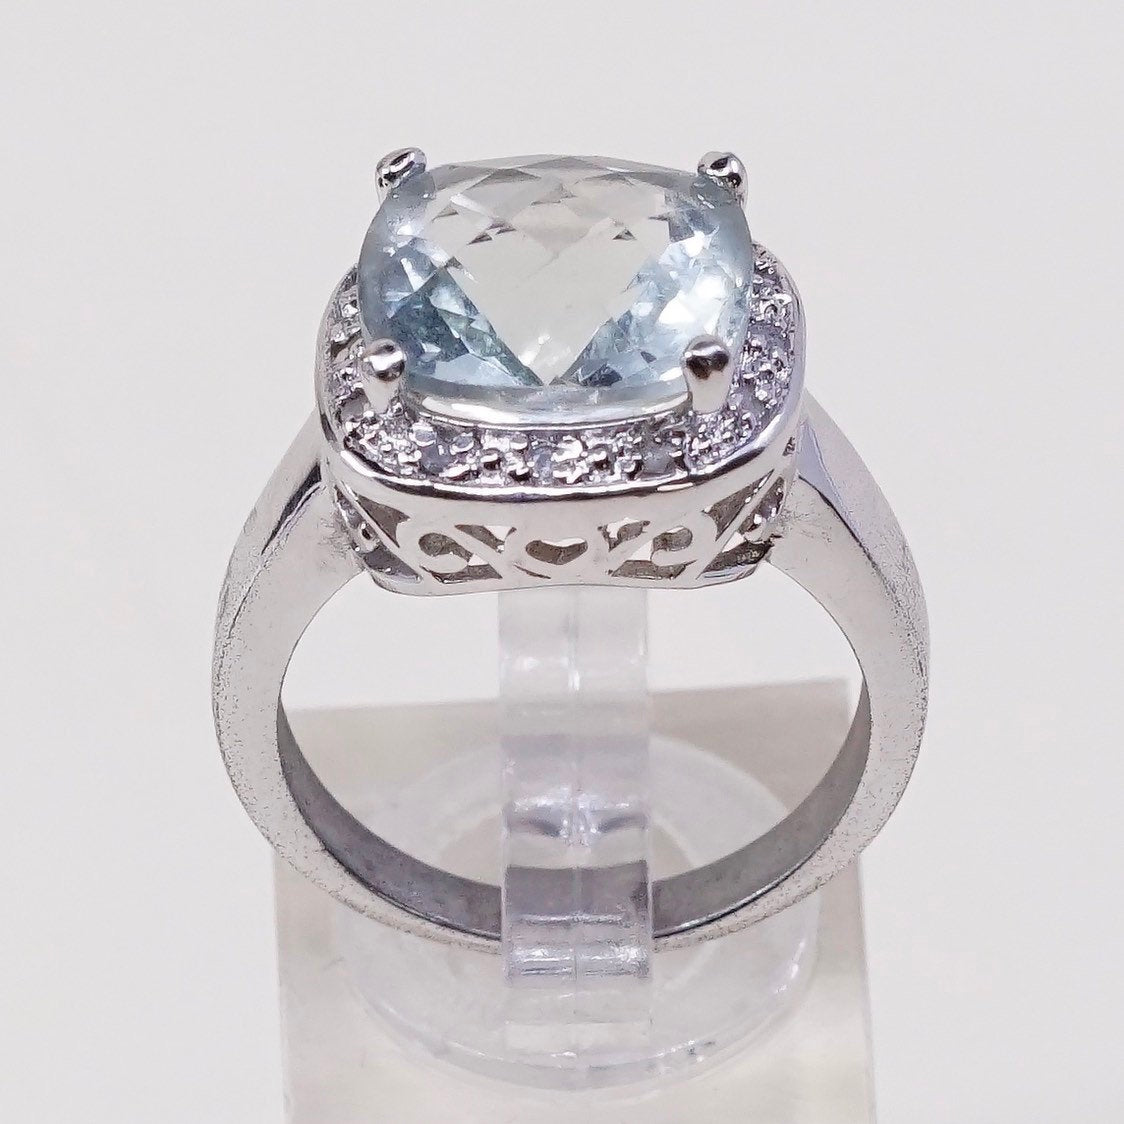 sz 8.25 sterling 925 silver handmade ring prehnite grapestone n genuine diamond